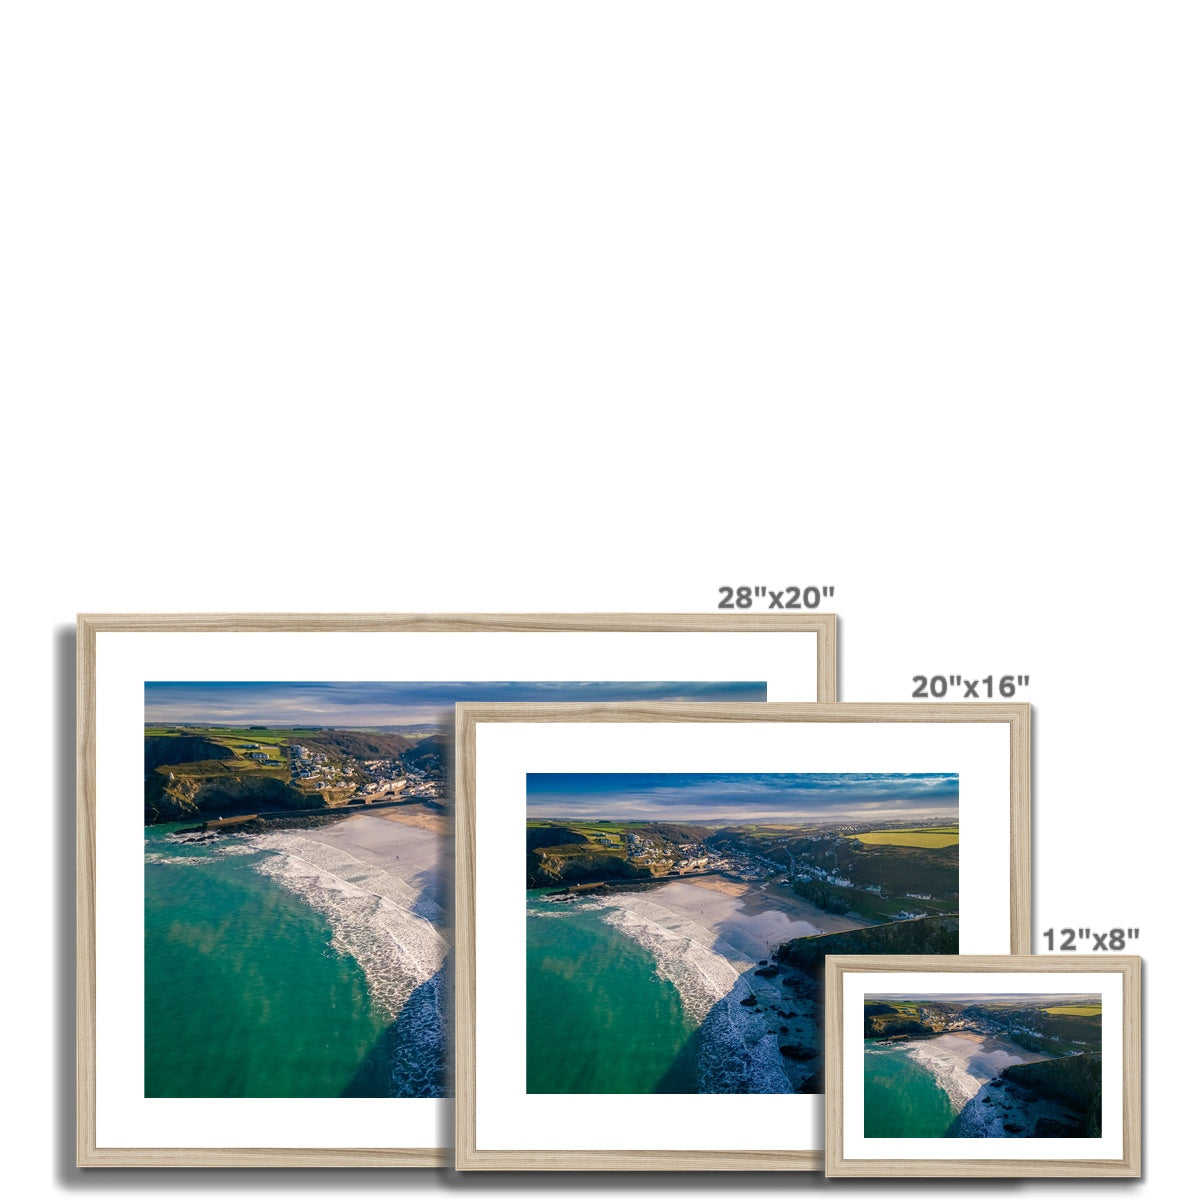 portreath beach frame sizes